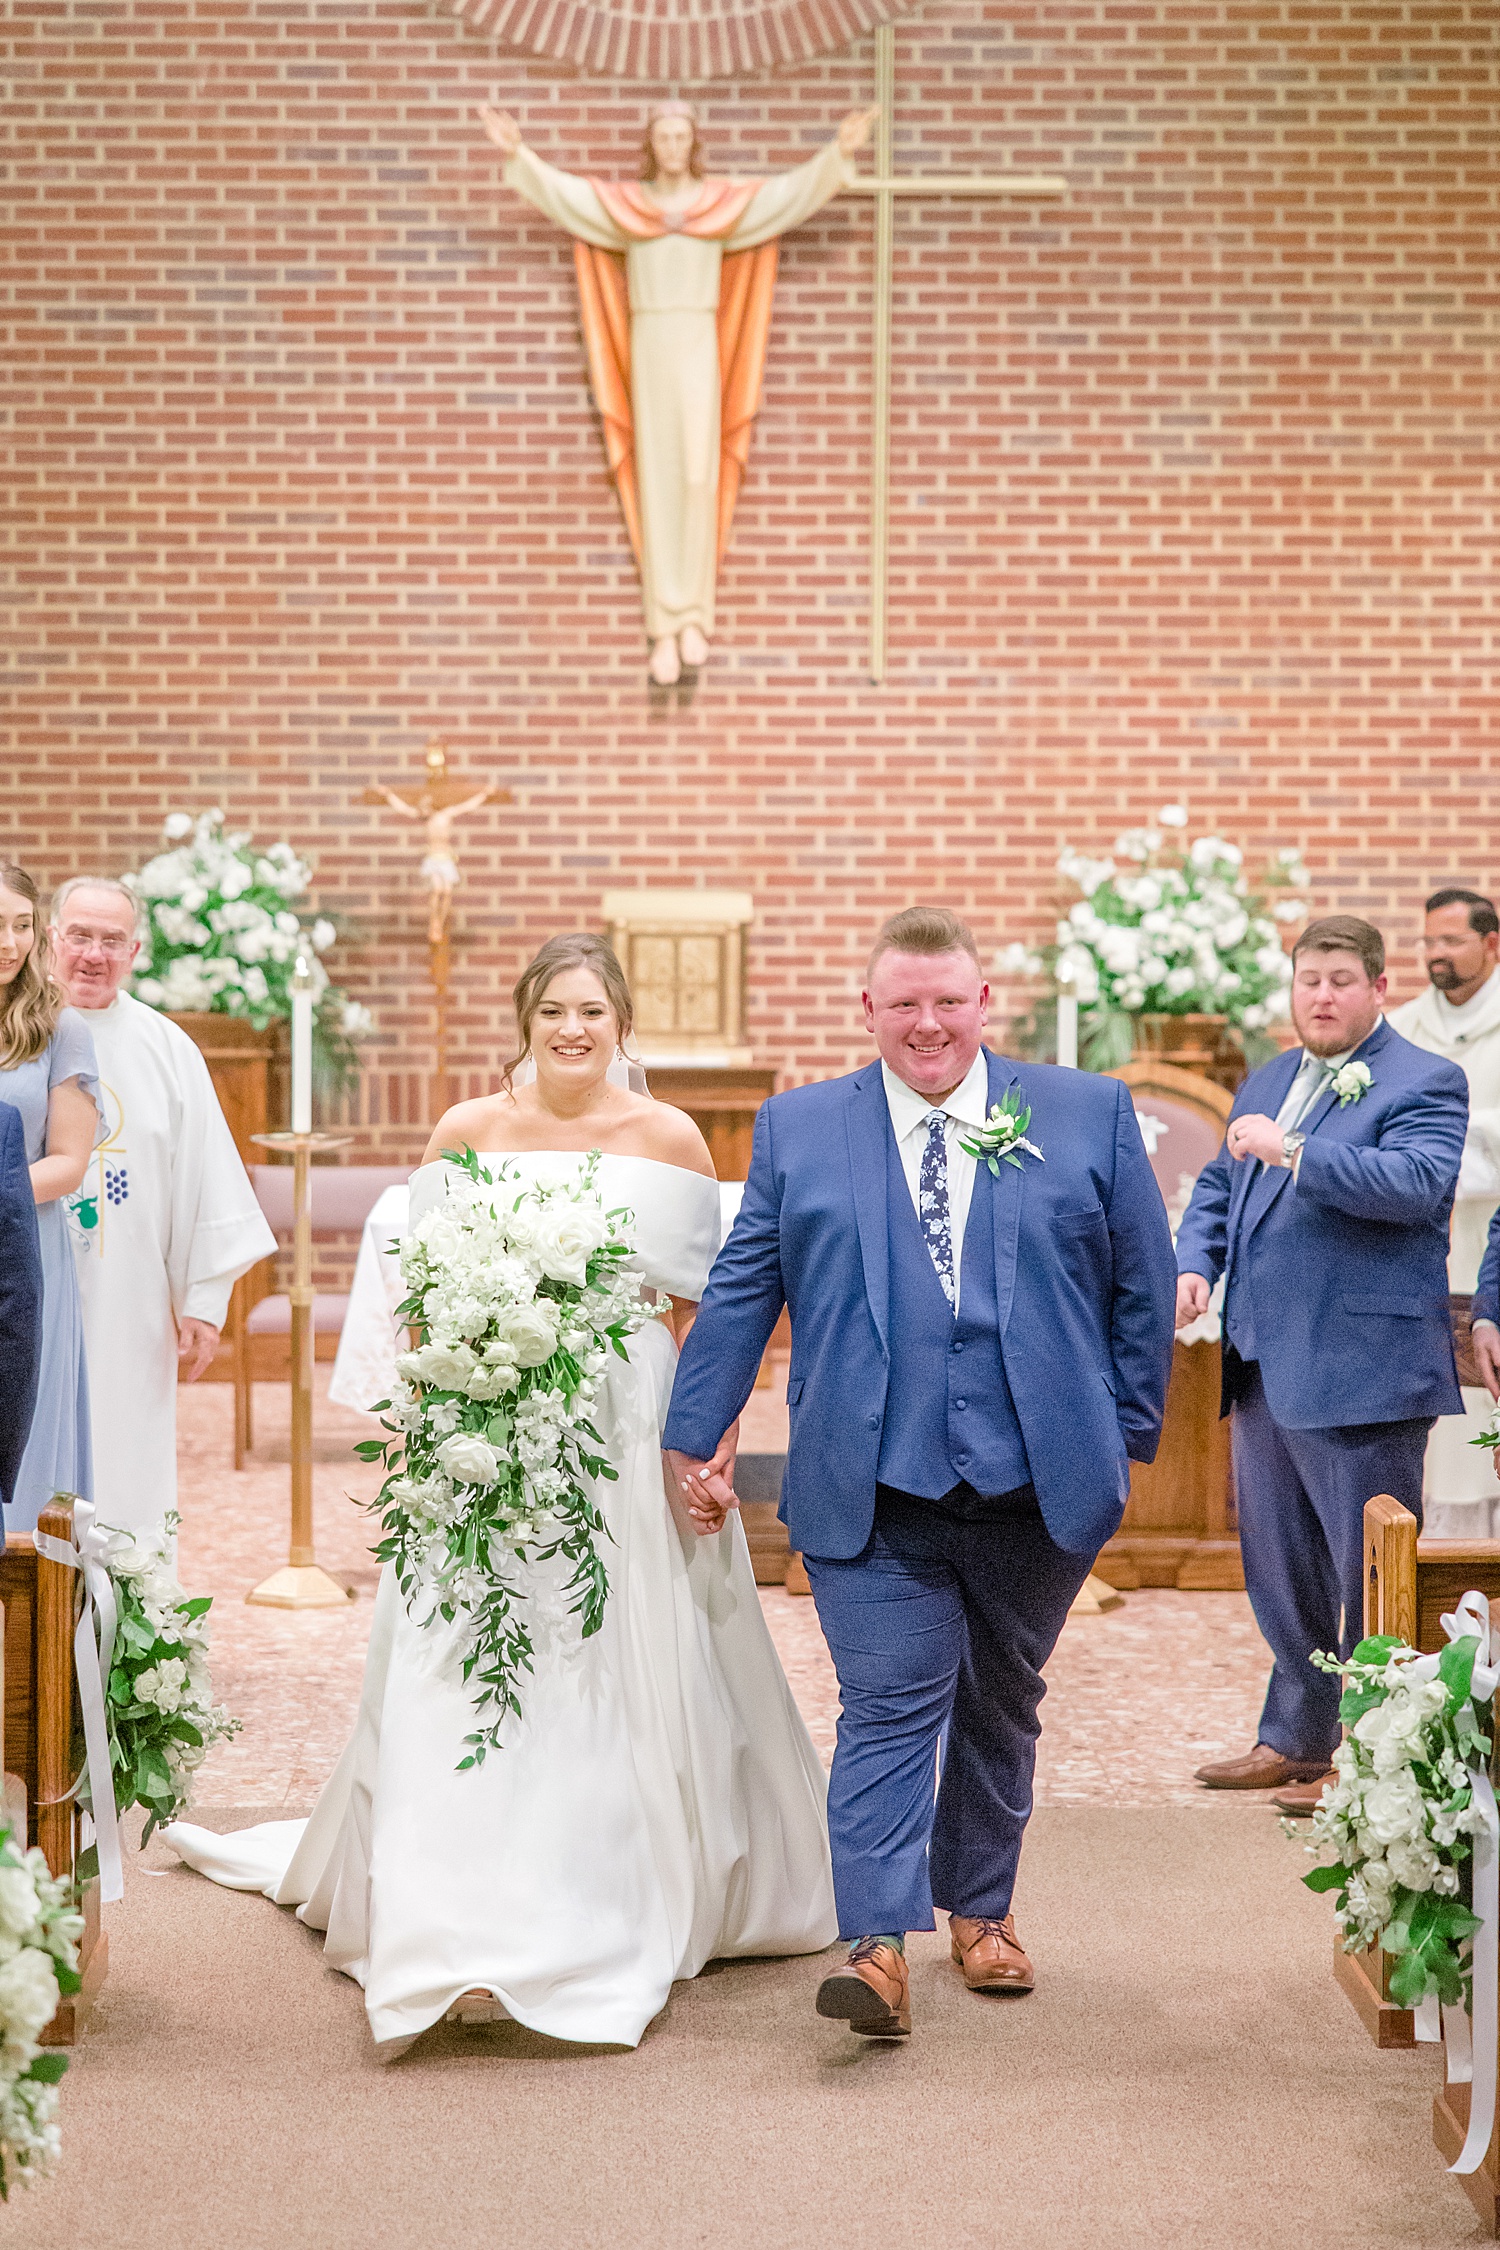 newlyweds exit the church together in Birmingham AL